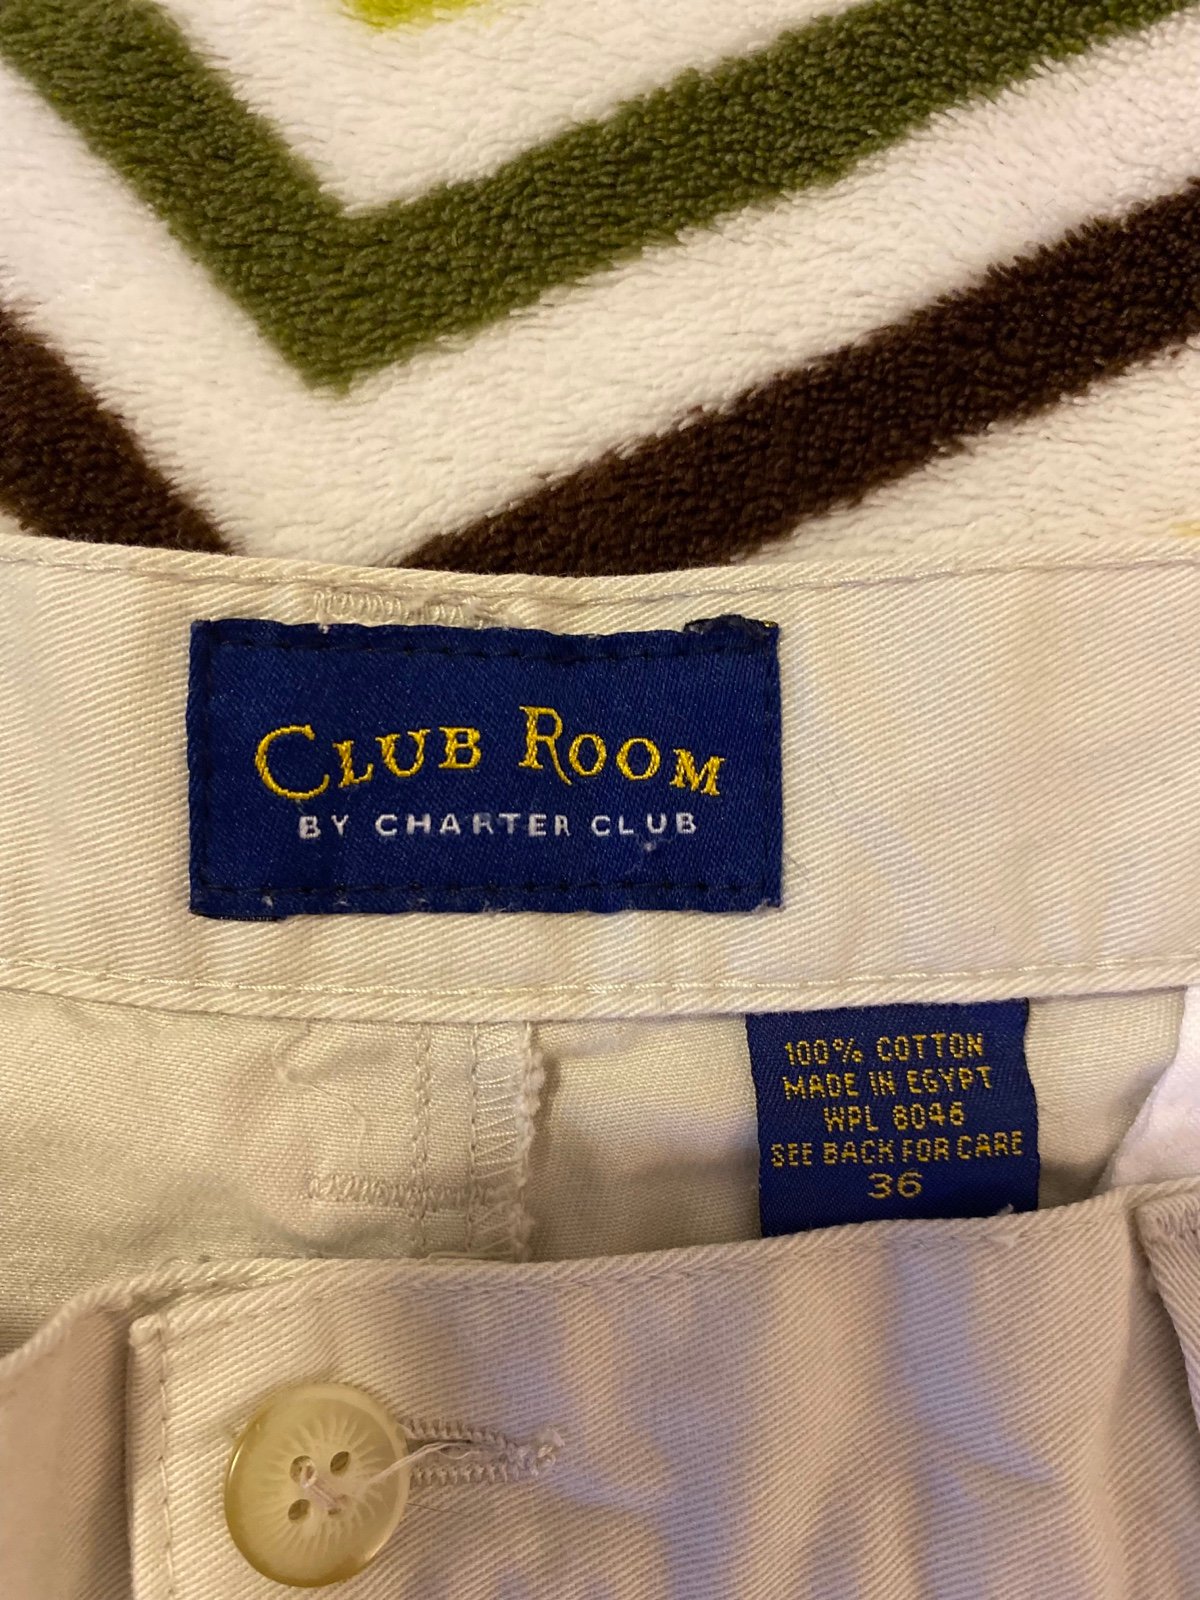 Elegant Club Room by Charter Club Shorts PIqTiA8Kq best sale